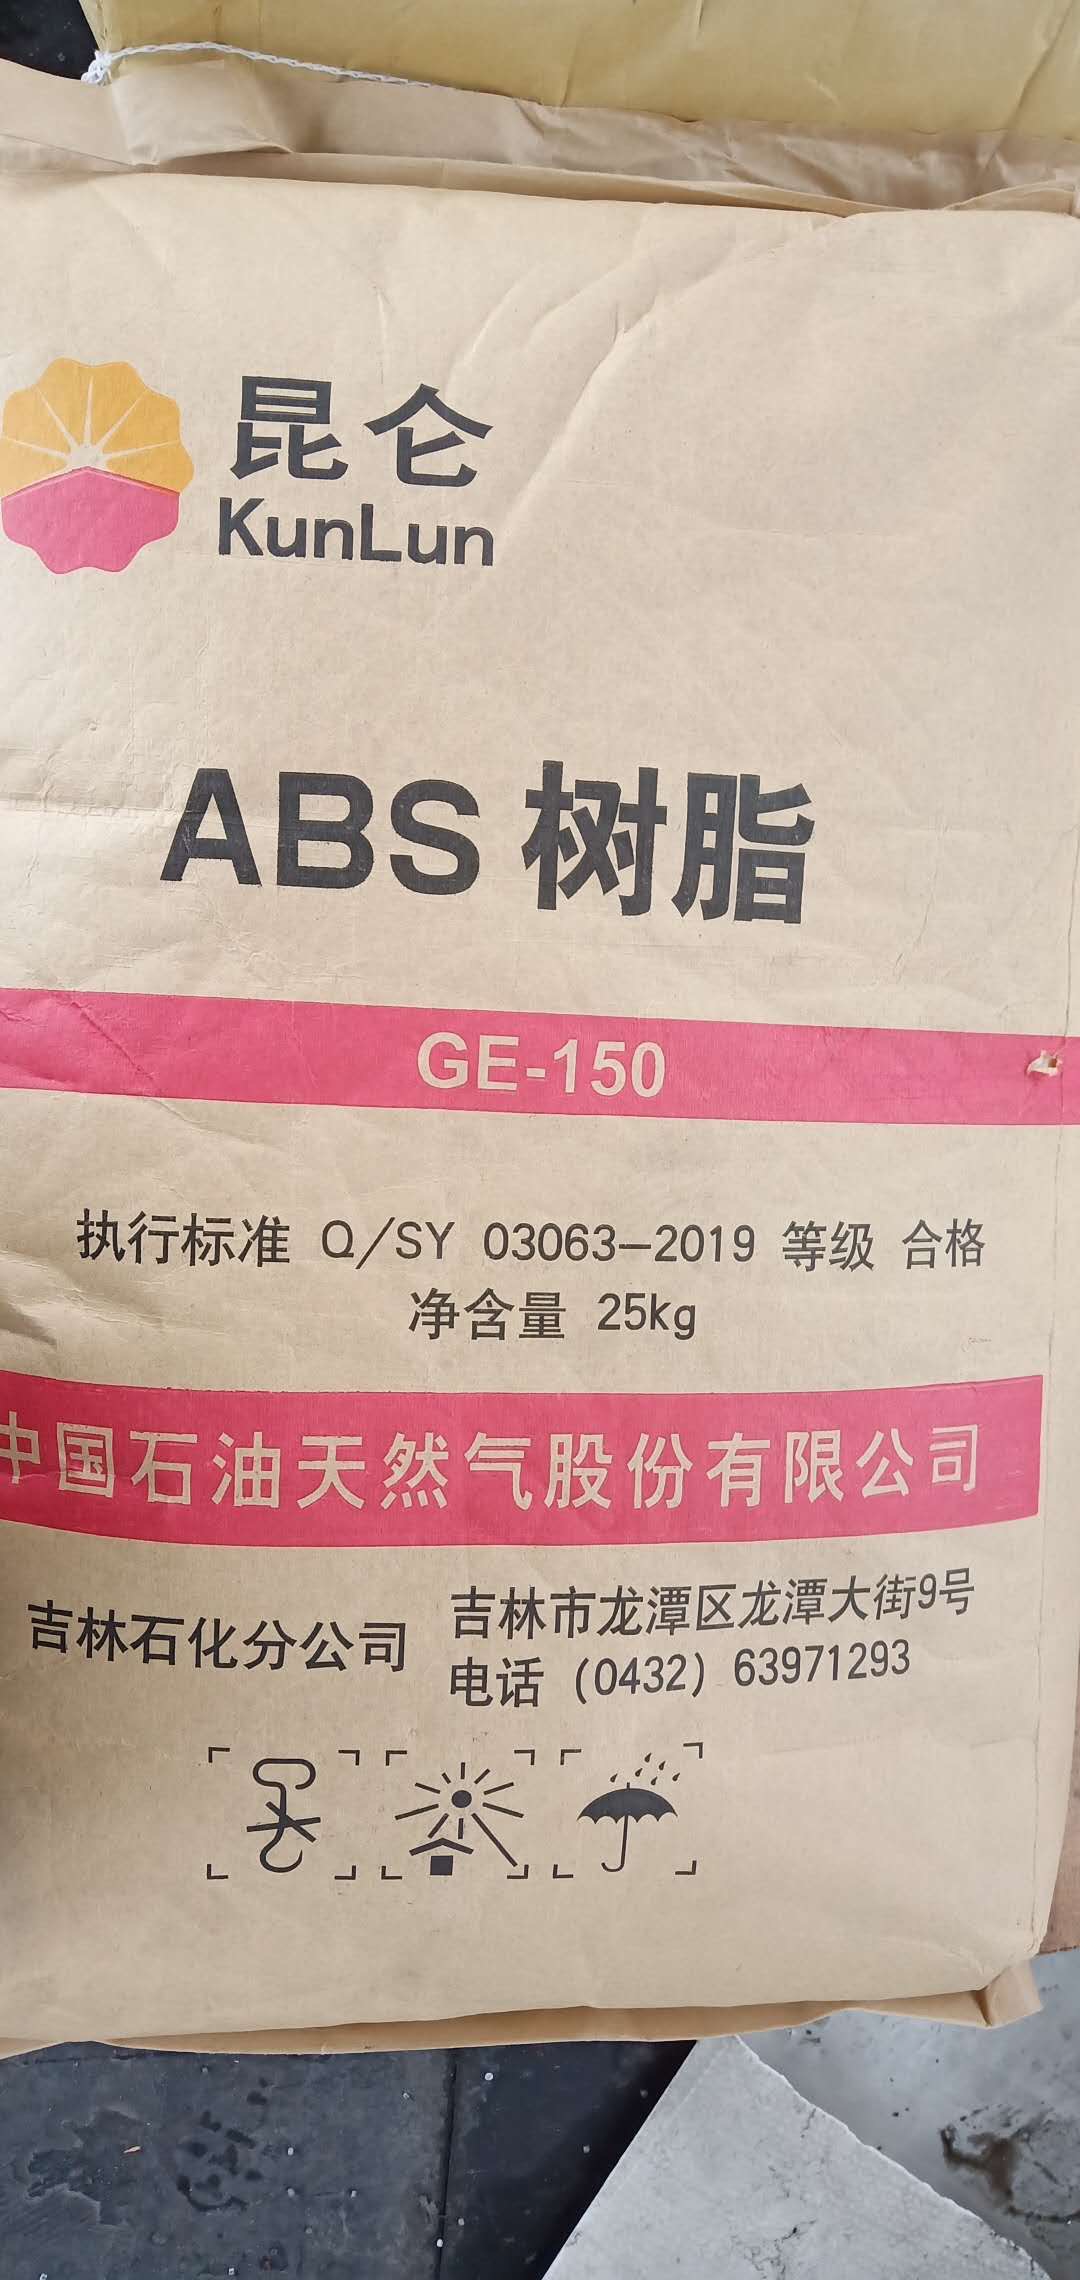 GE-150中石油吉林昆仑ABS树脂